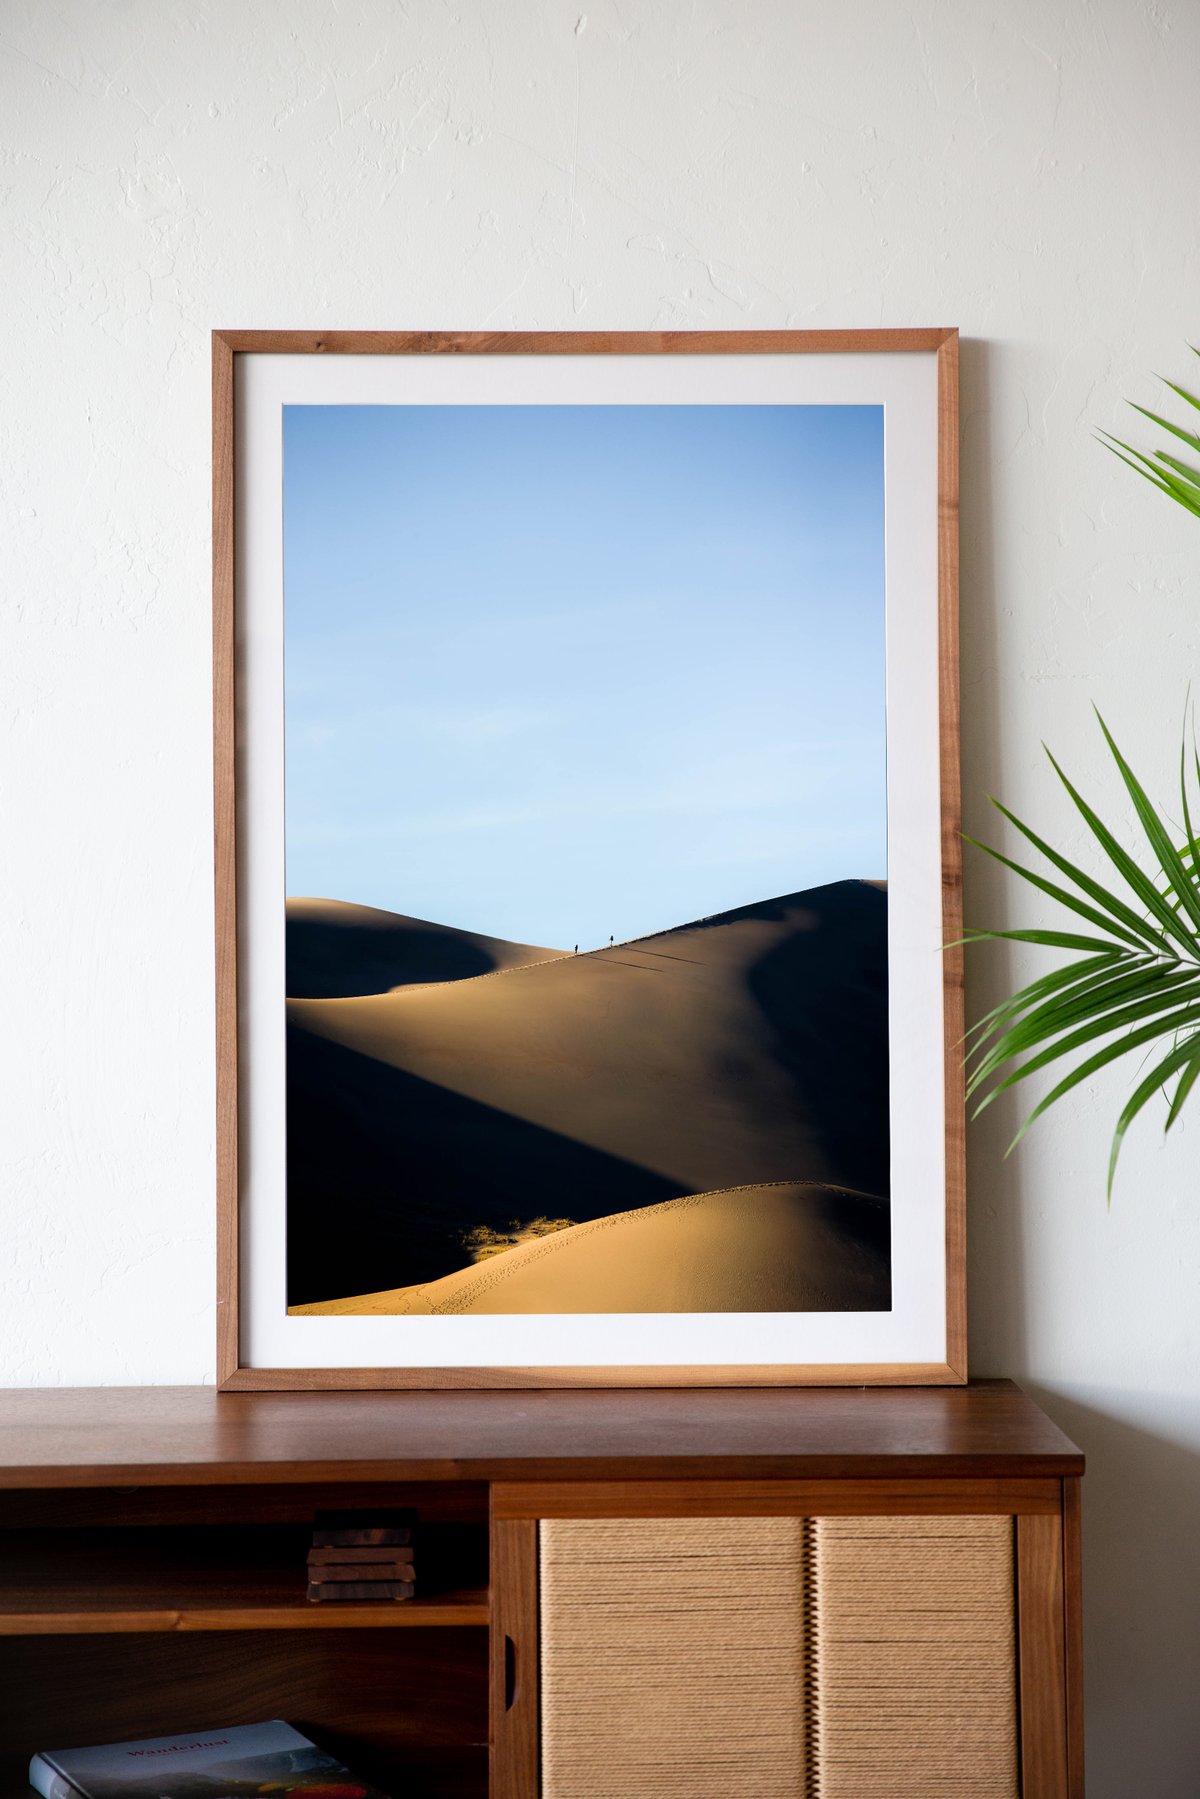 Image of Dunes